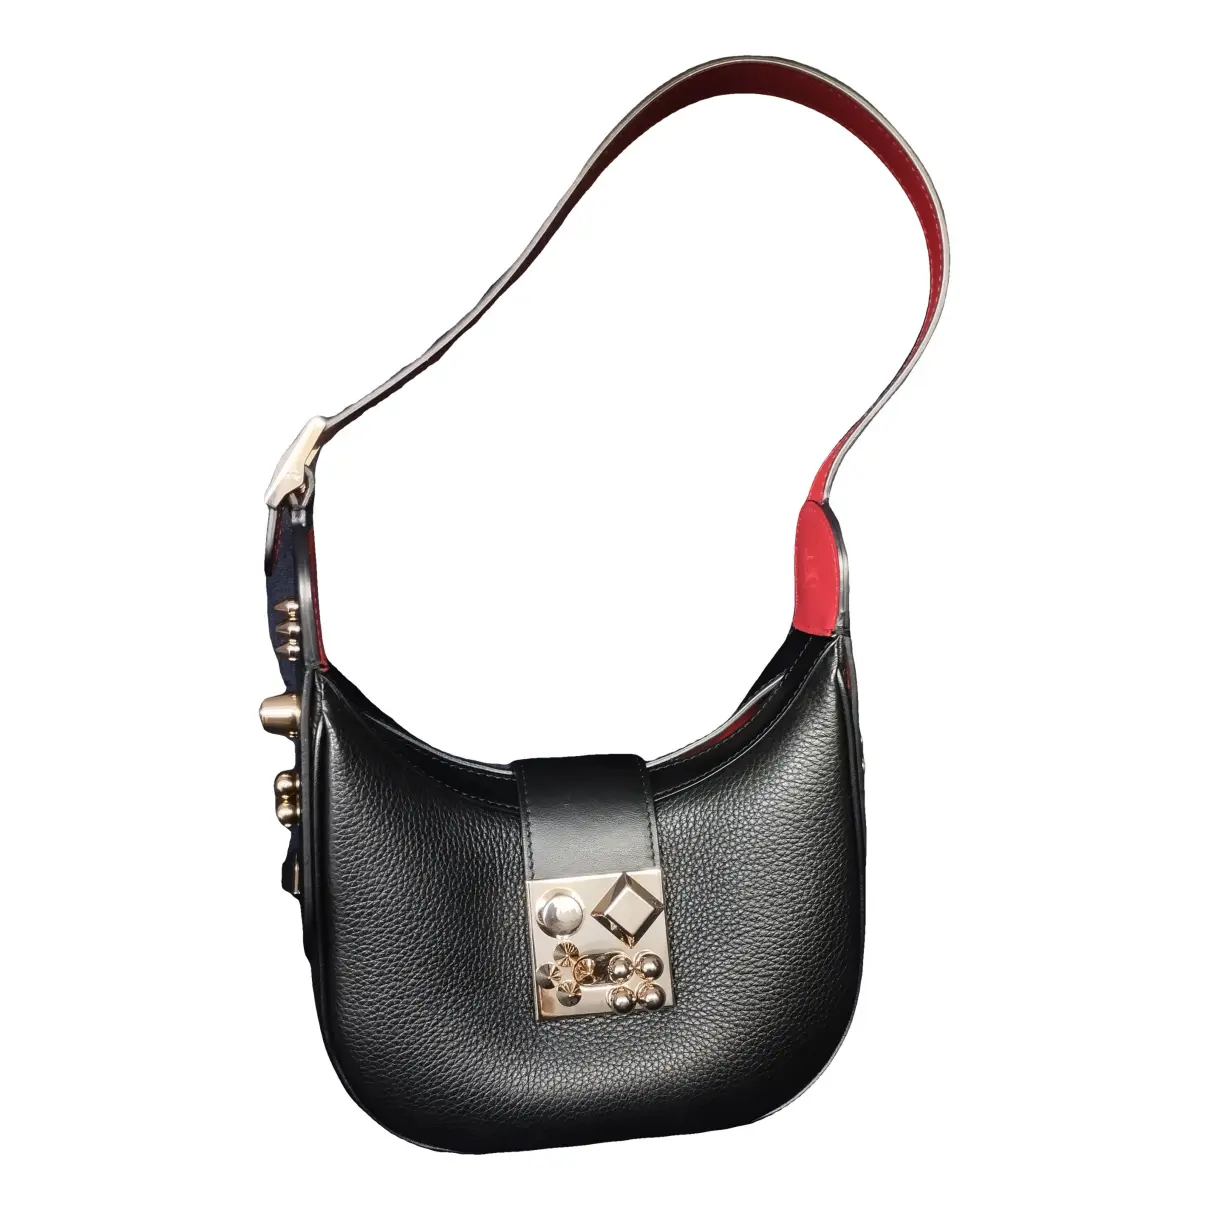 Carasky leather handbag